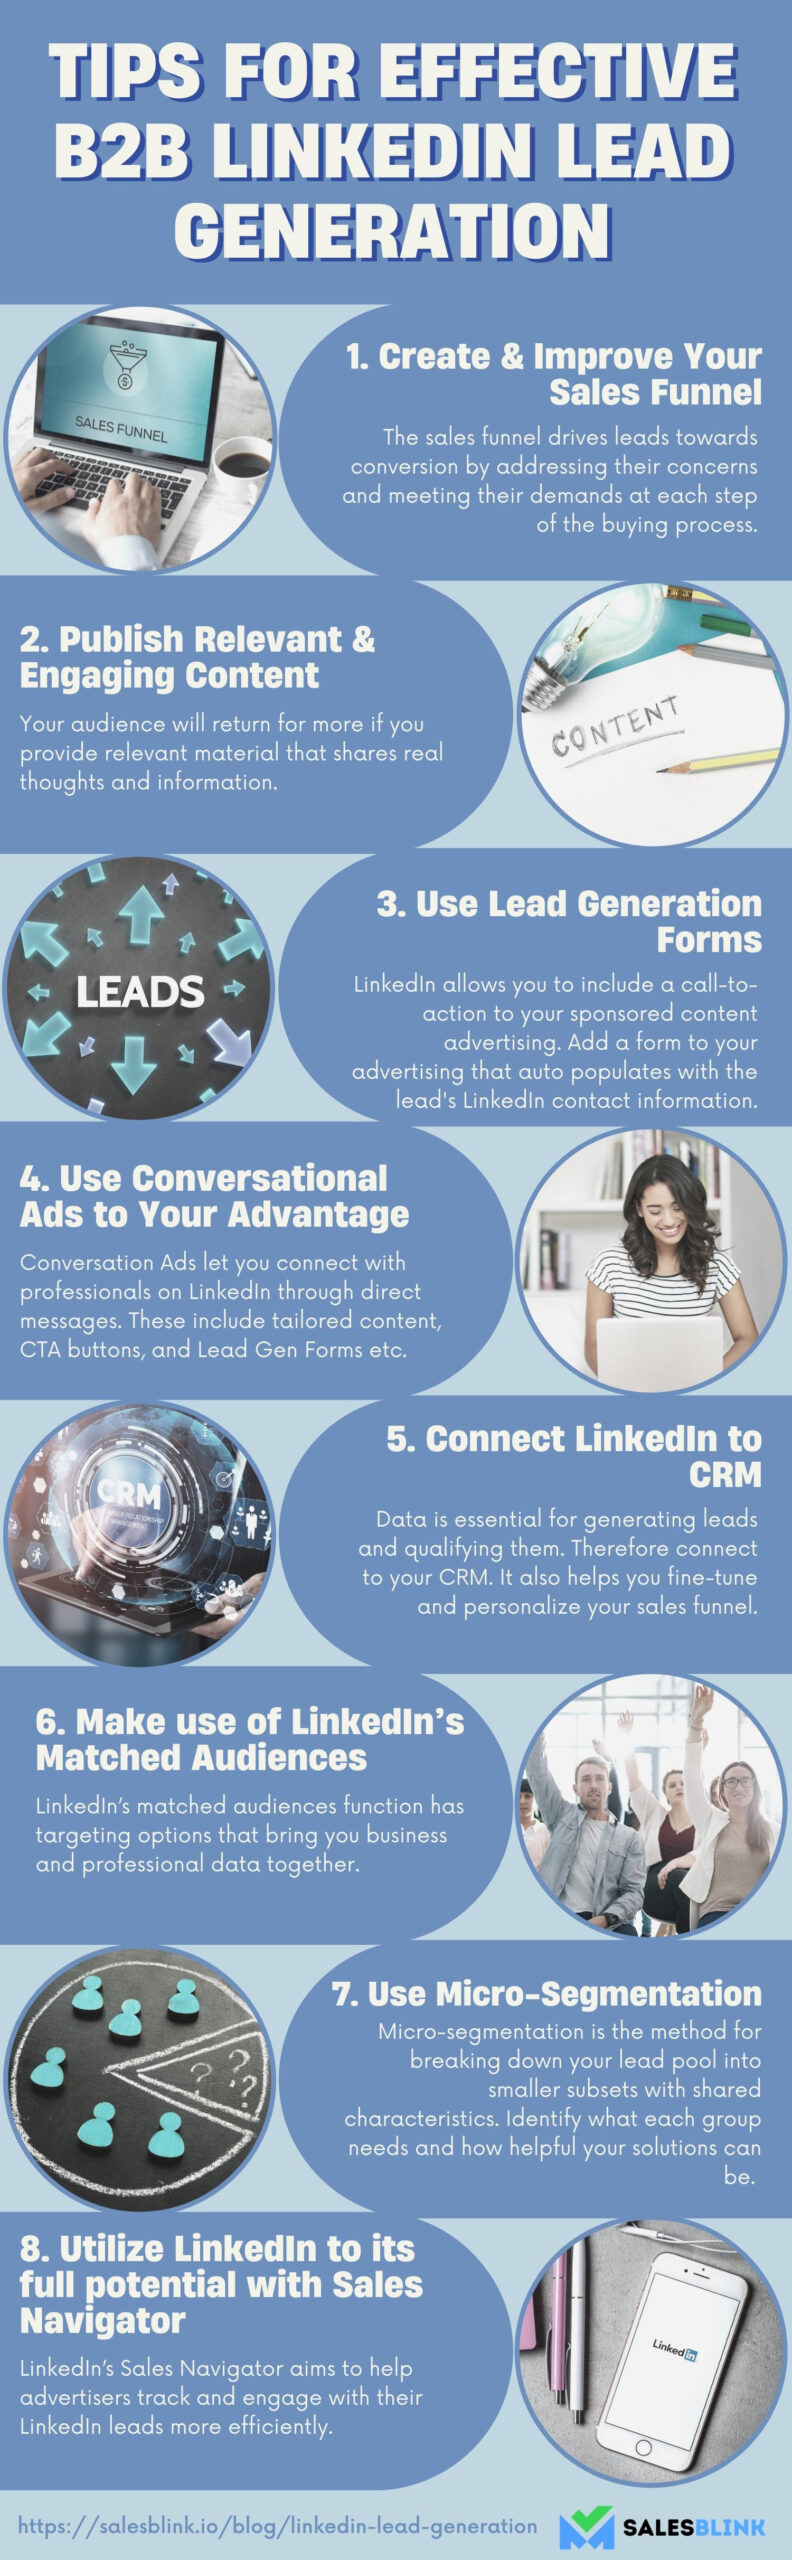 Tips For Effective B2B LinkedIn Lead Generation-LinkedIn lead generation